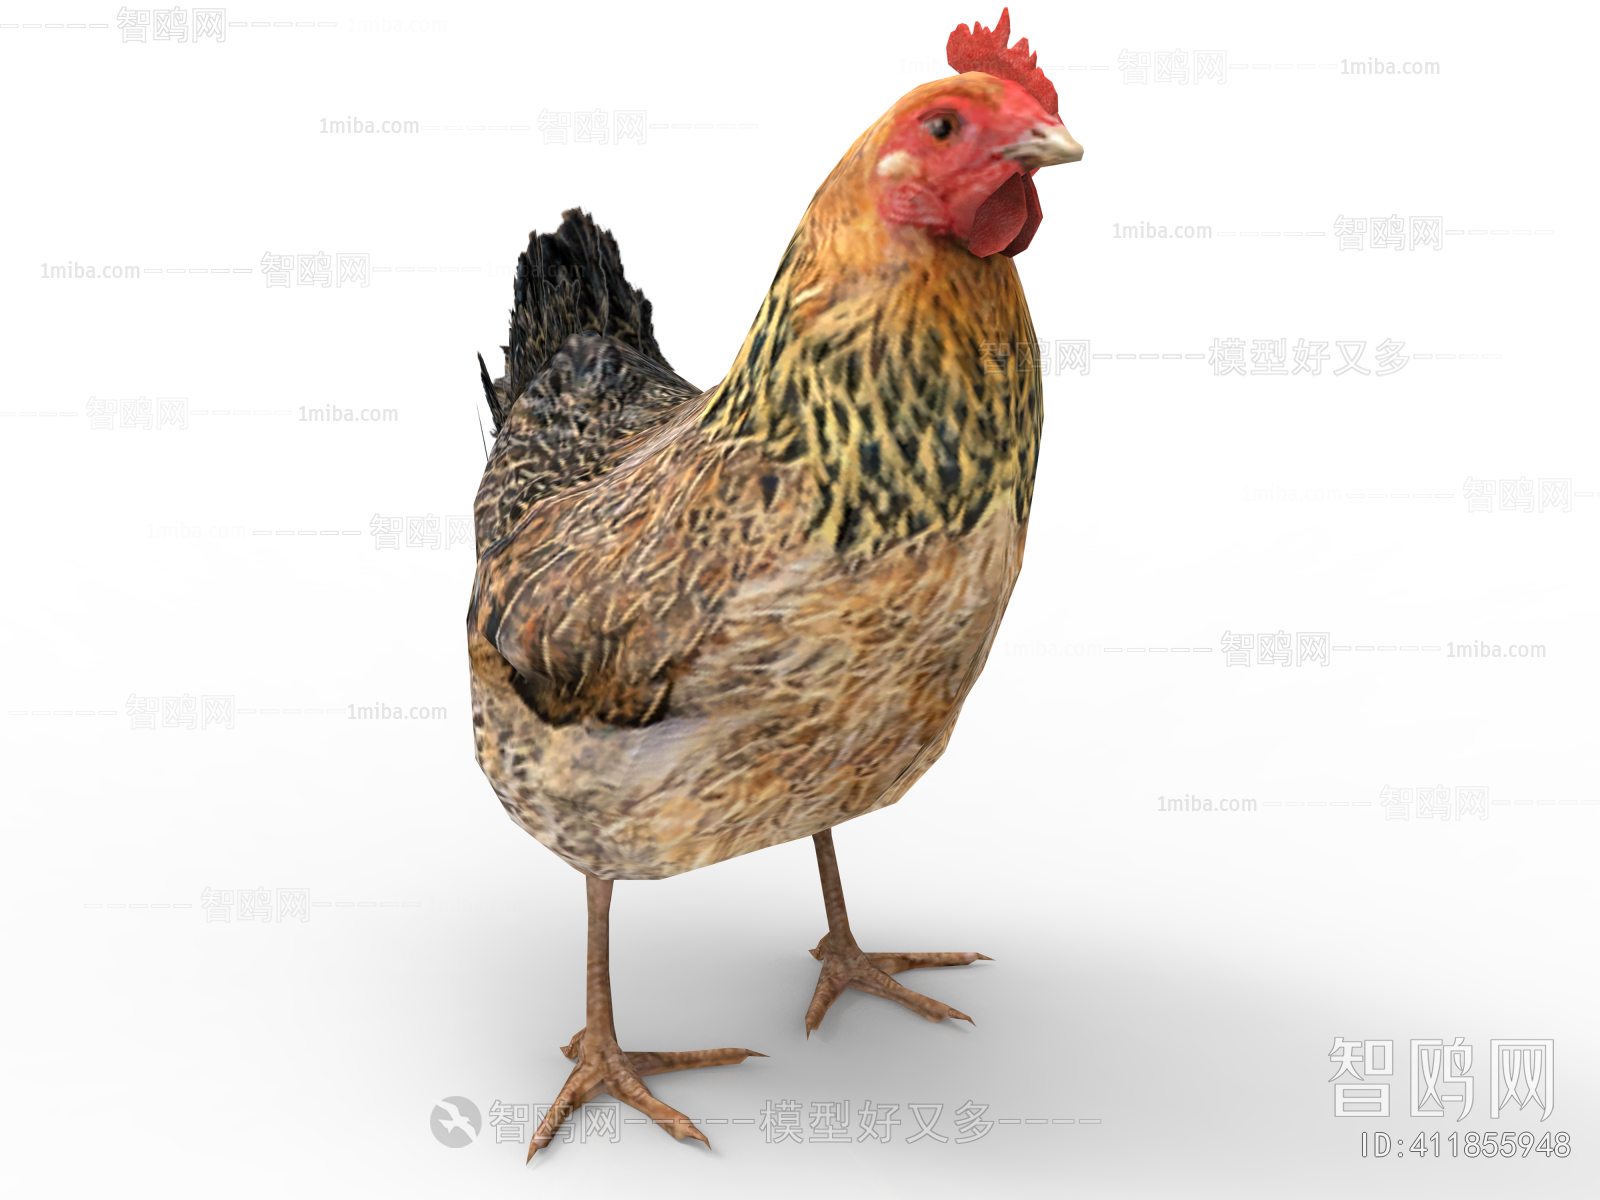 Modern Poultry Animal